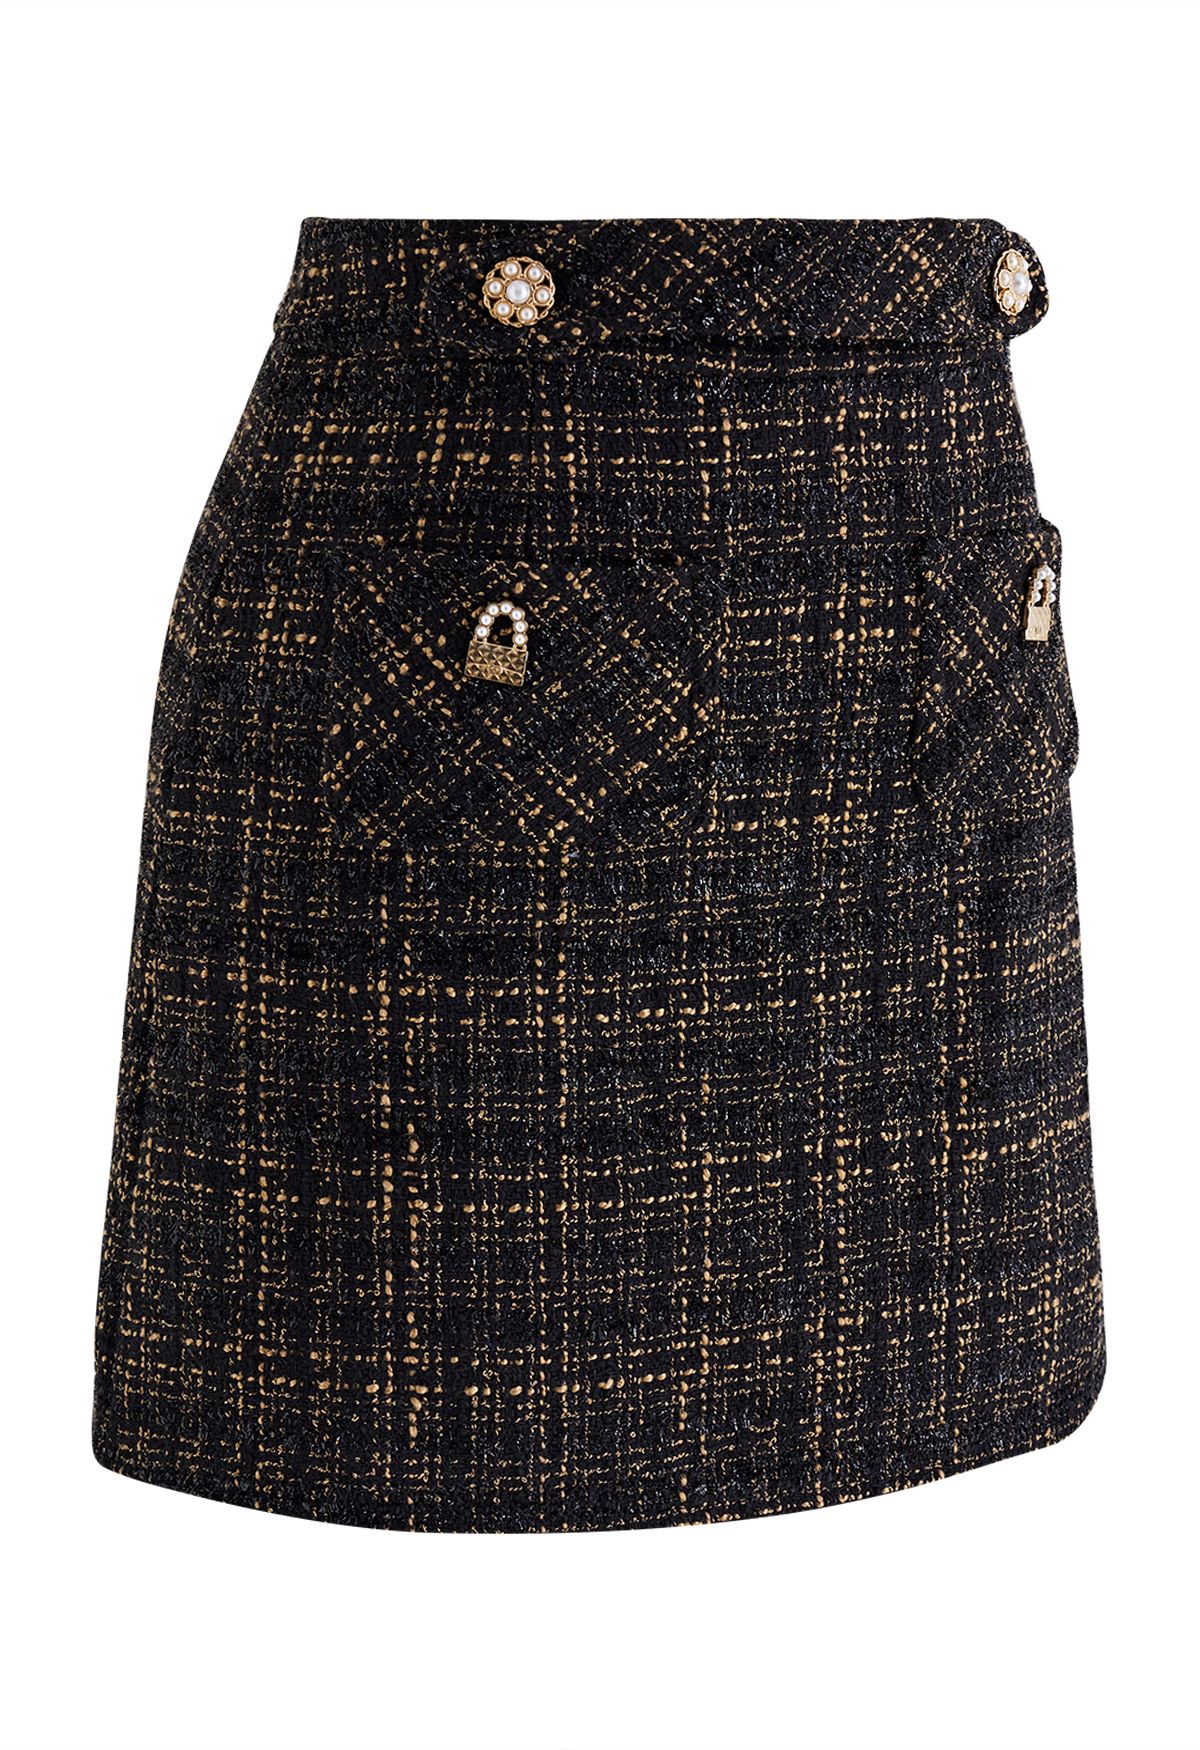 Metallic Thread Plaid Tweed Mini Skirt in Black - Retro, Indie and ...